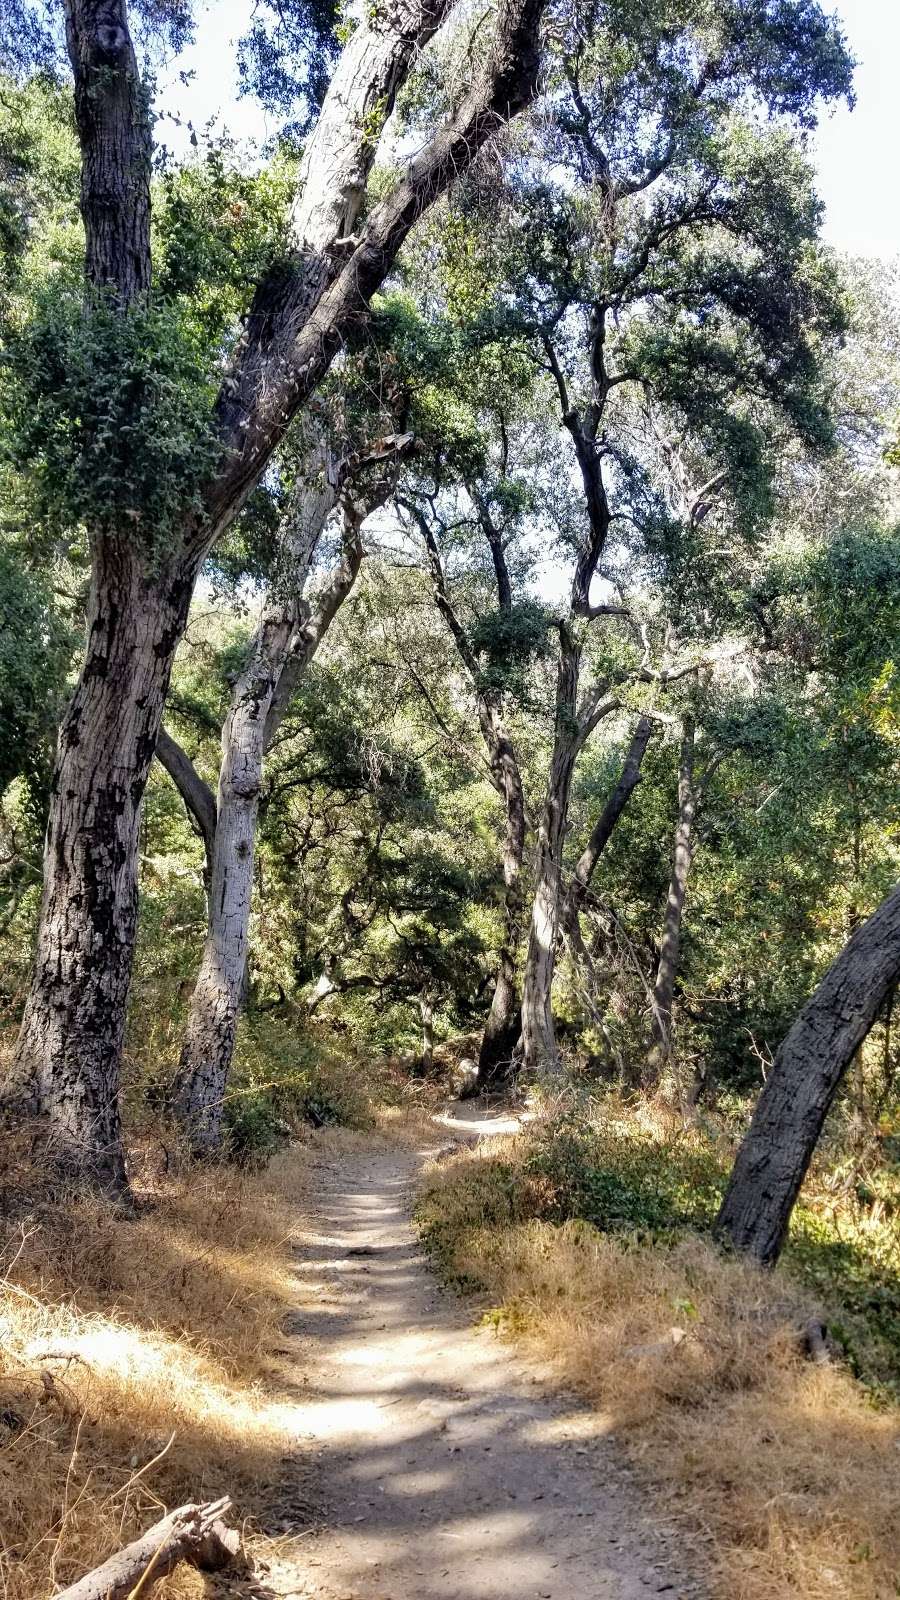 Mt Zion & Sturtevant Trail | Mt Zion Trail, Sierra Madre, CA 91024